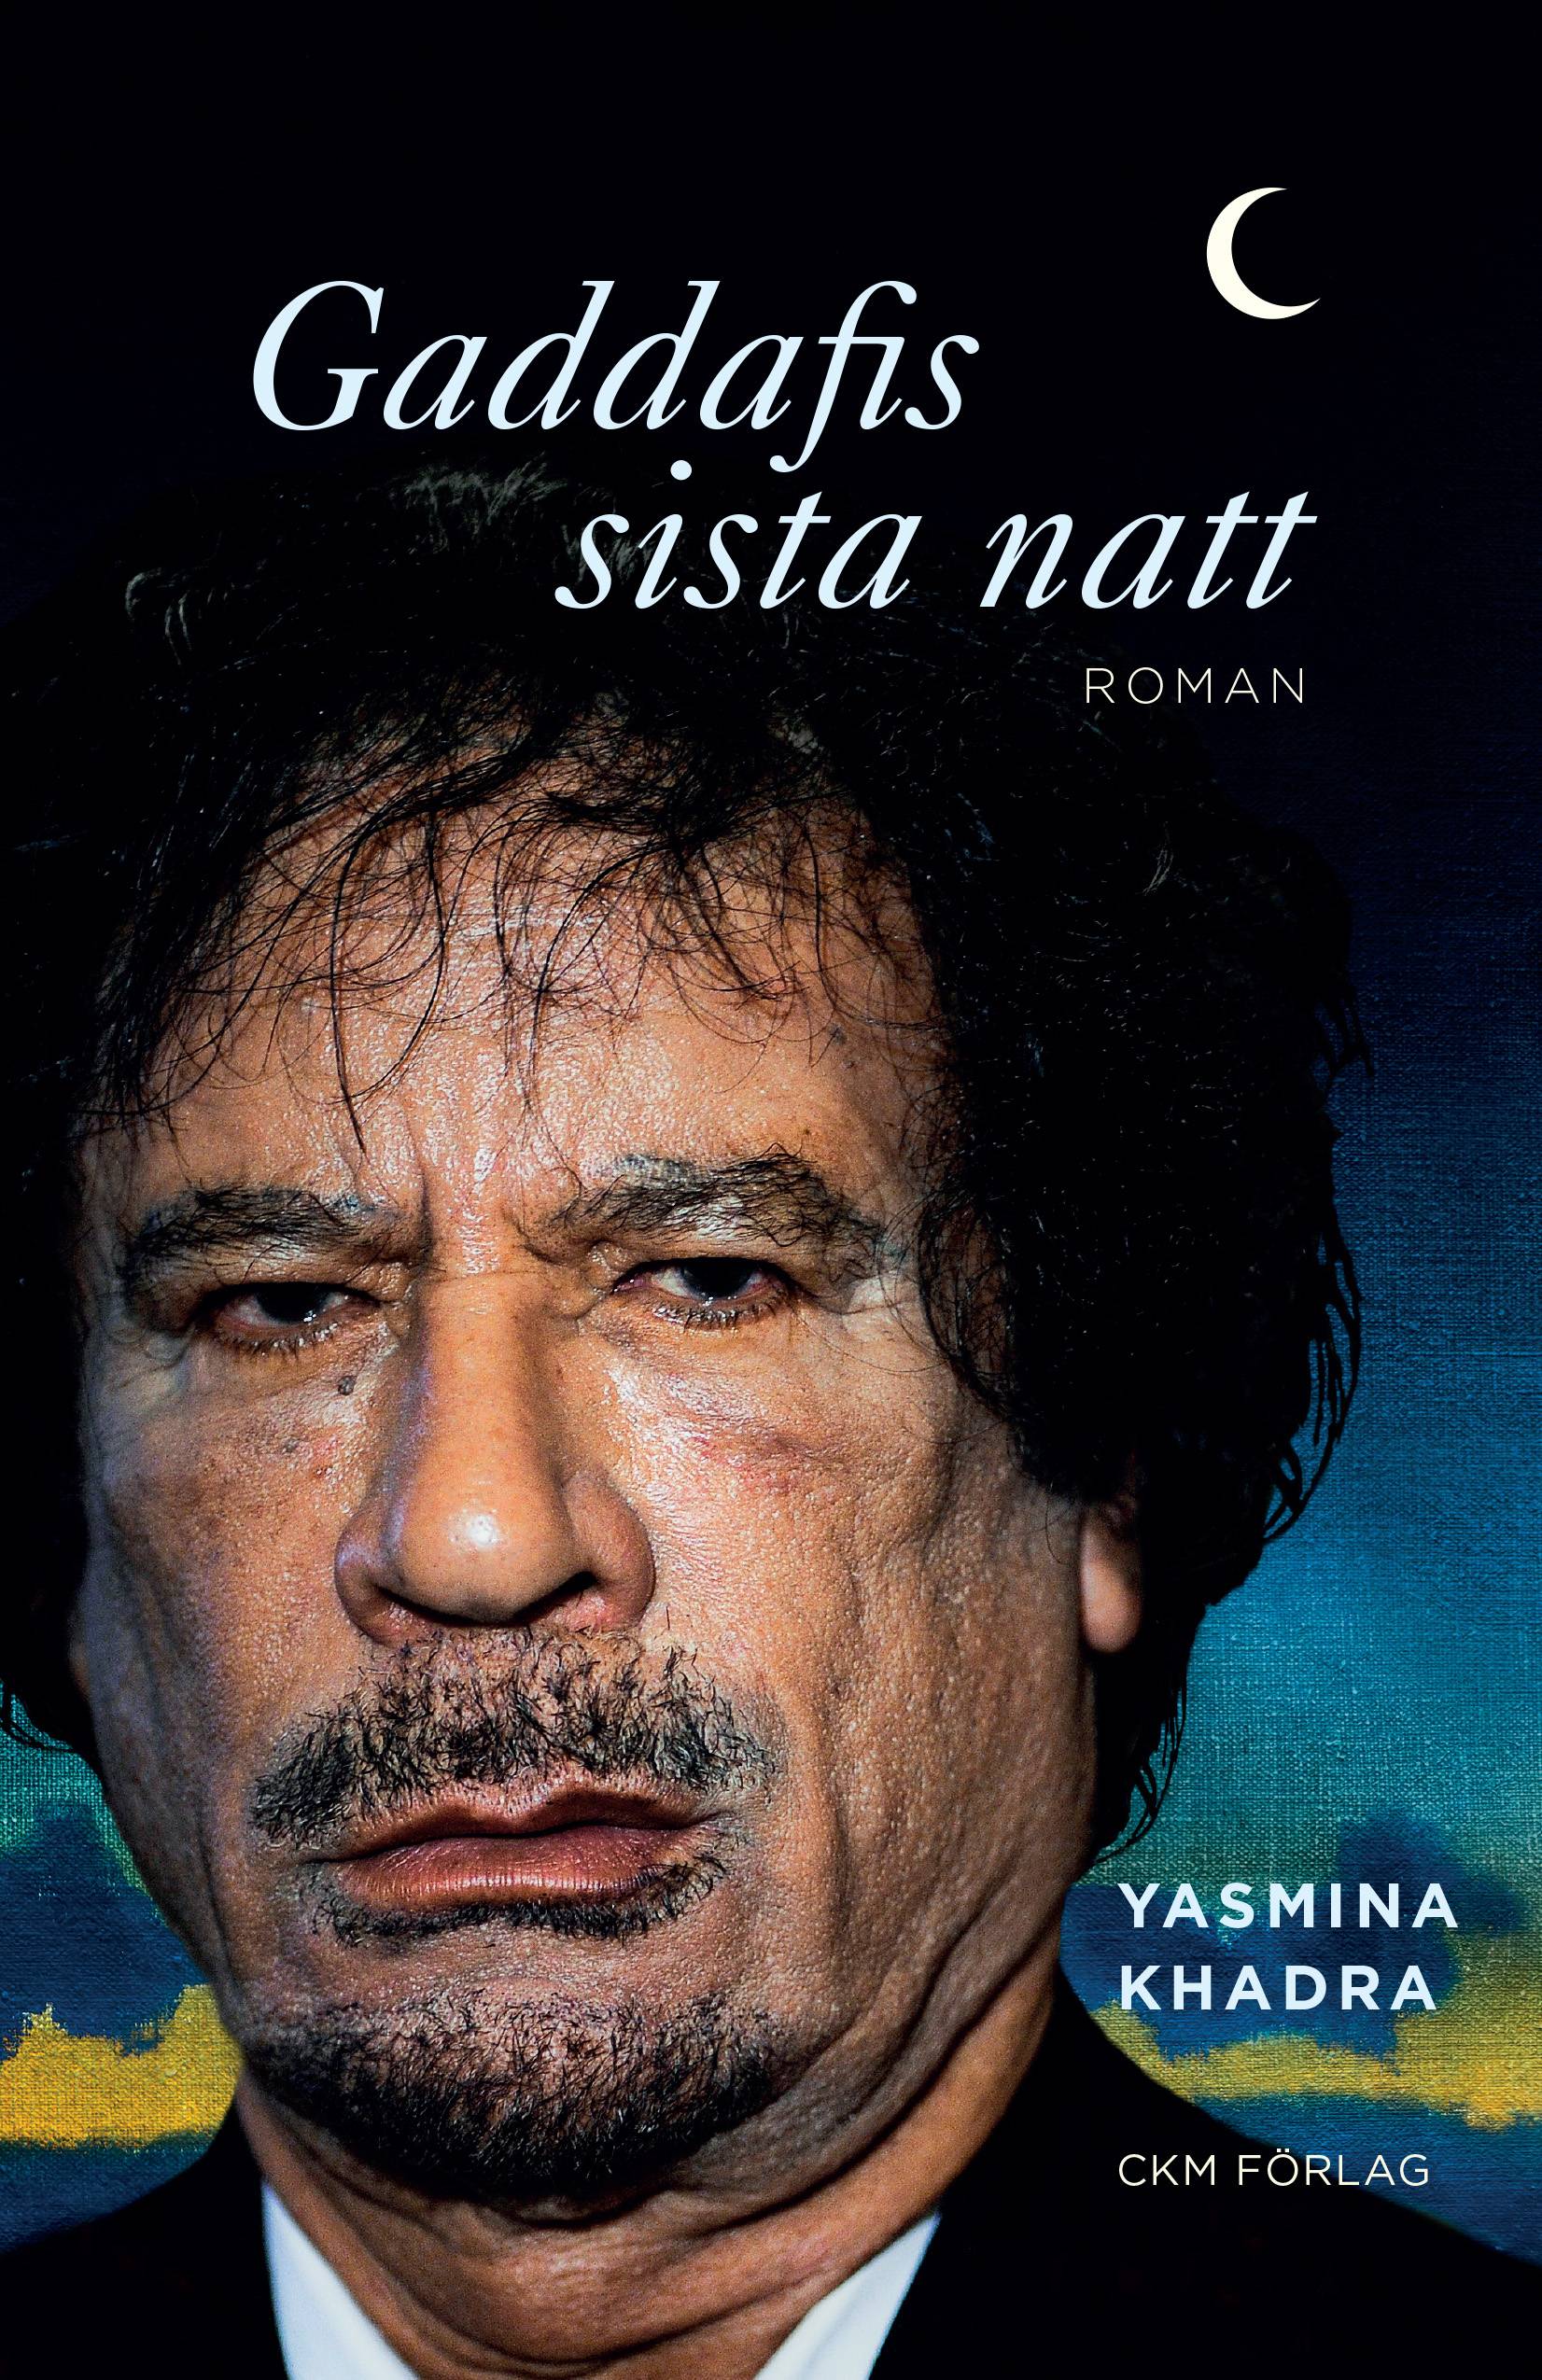 Gaddafis sista natt